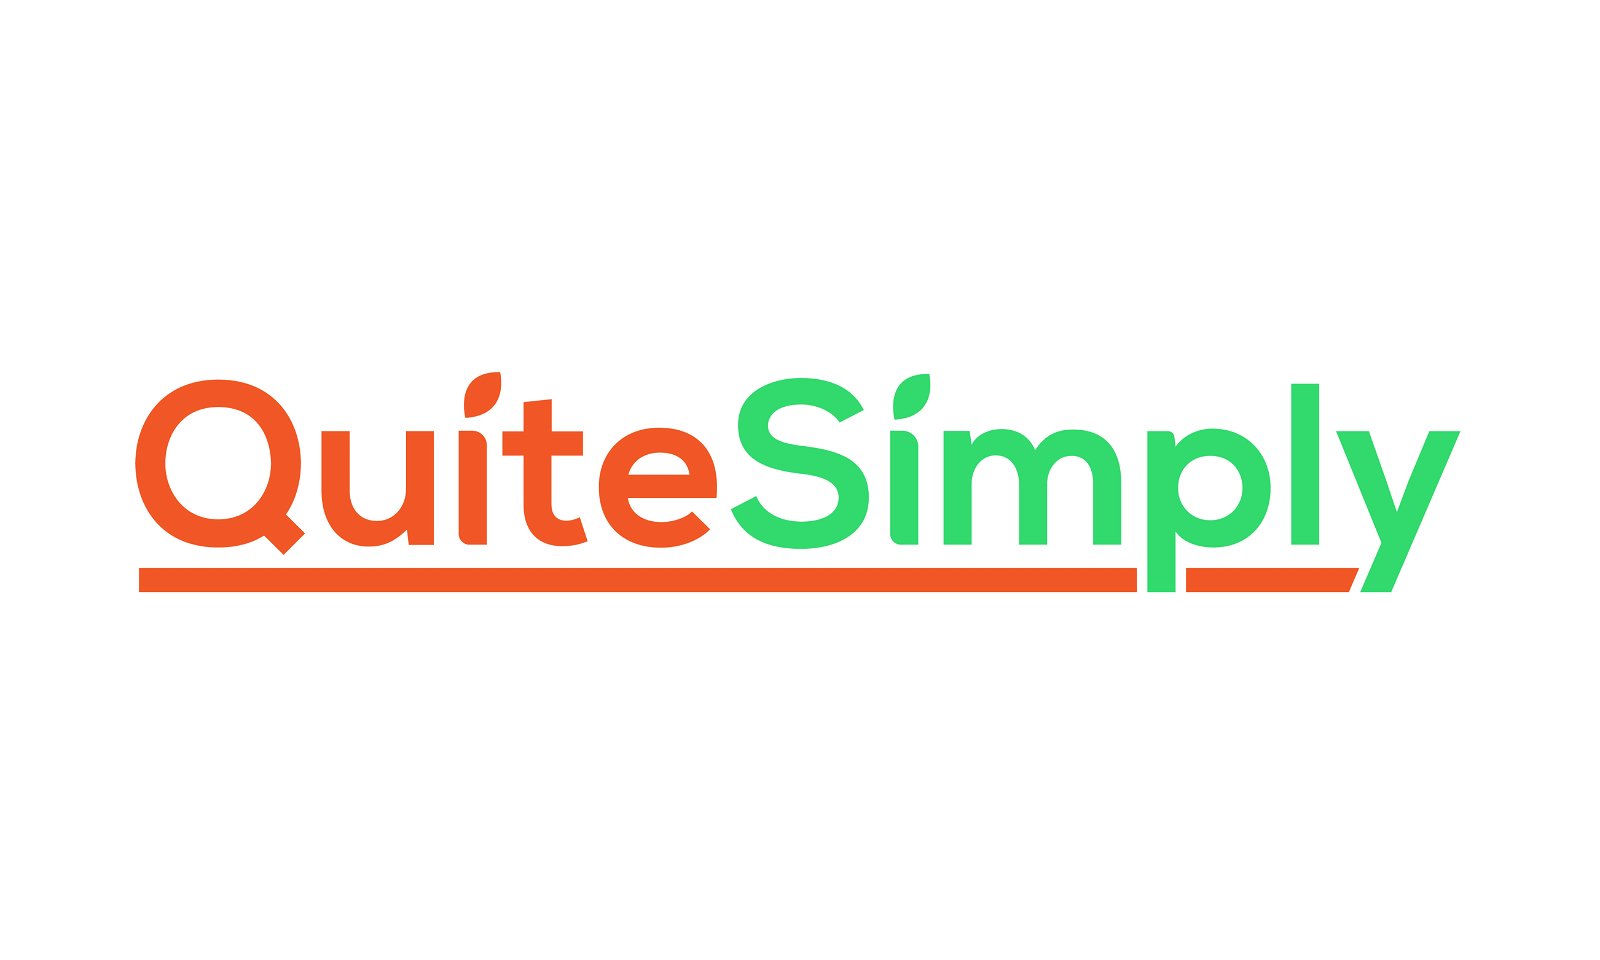 QuiteSimply.com - Creative brandable domain for sale